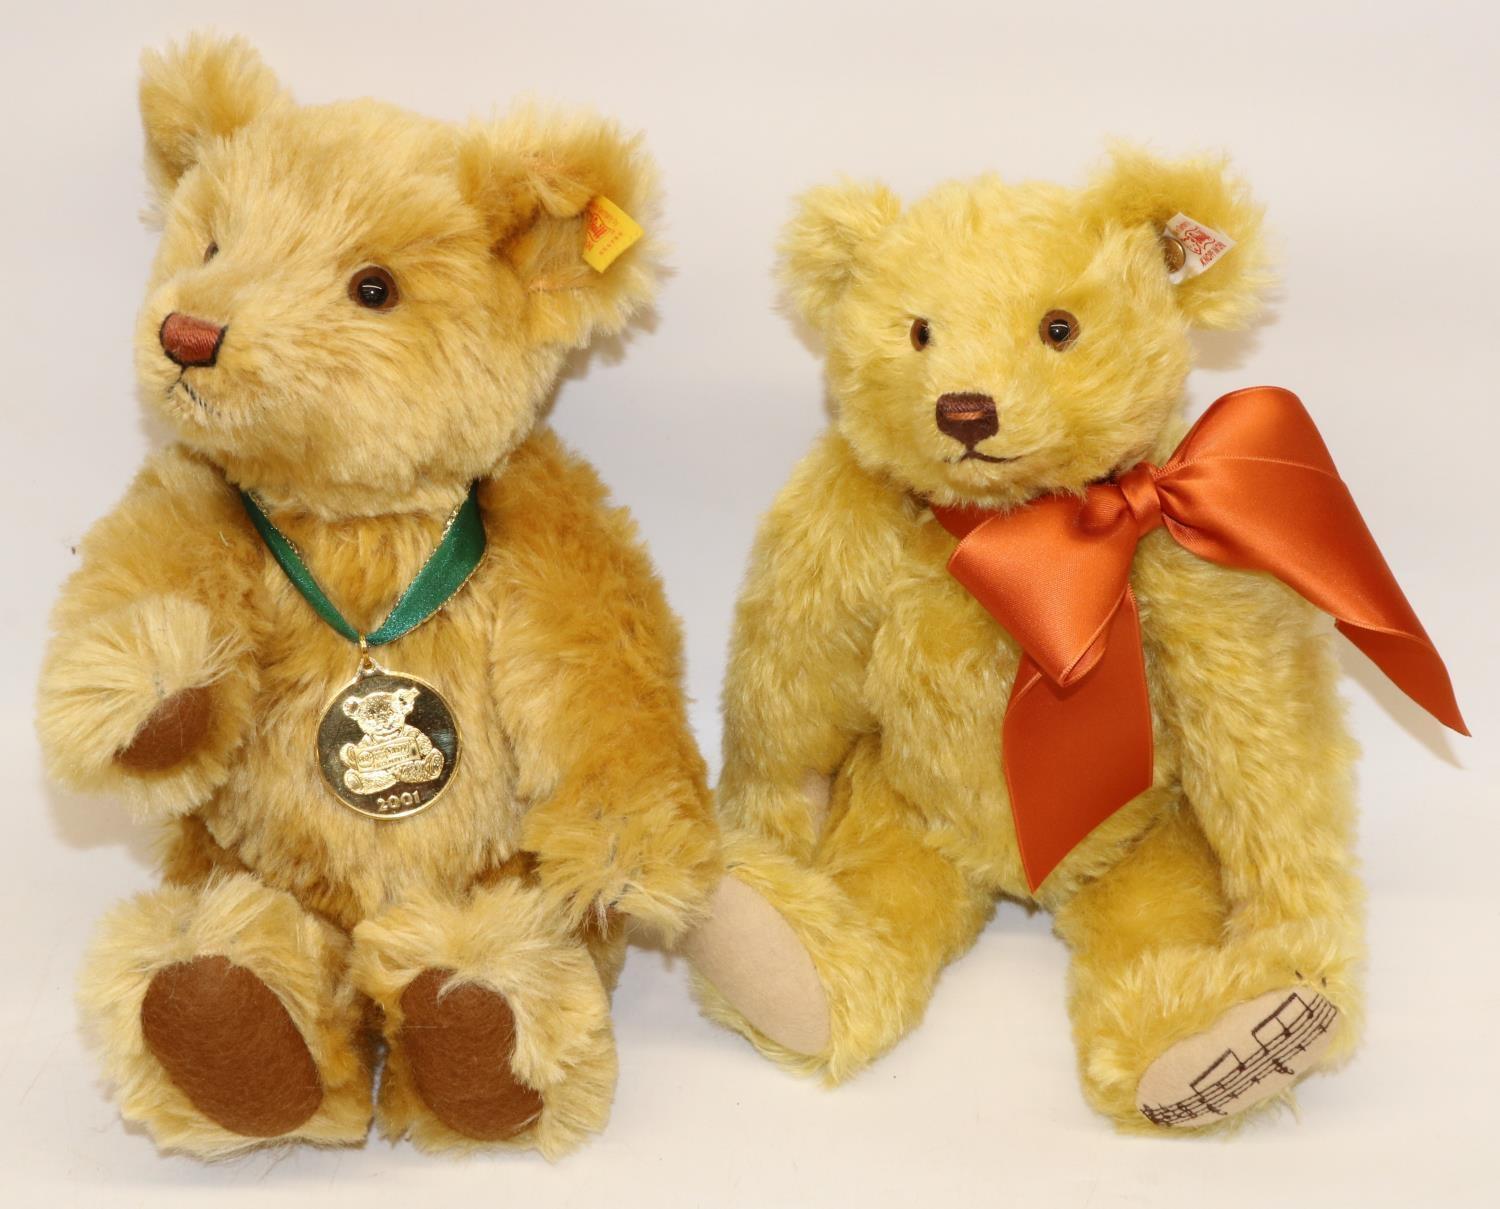 Two Steiff teddy bears: Danbury Mint 2001 bear, and a 2007 musical bear with orange ribbon, max.